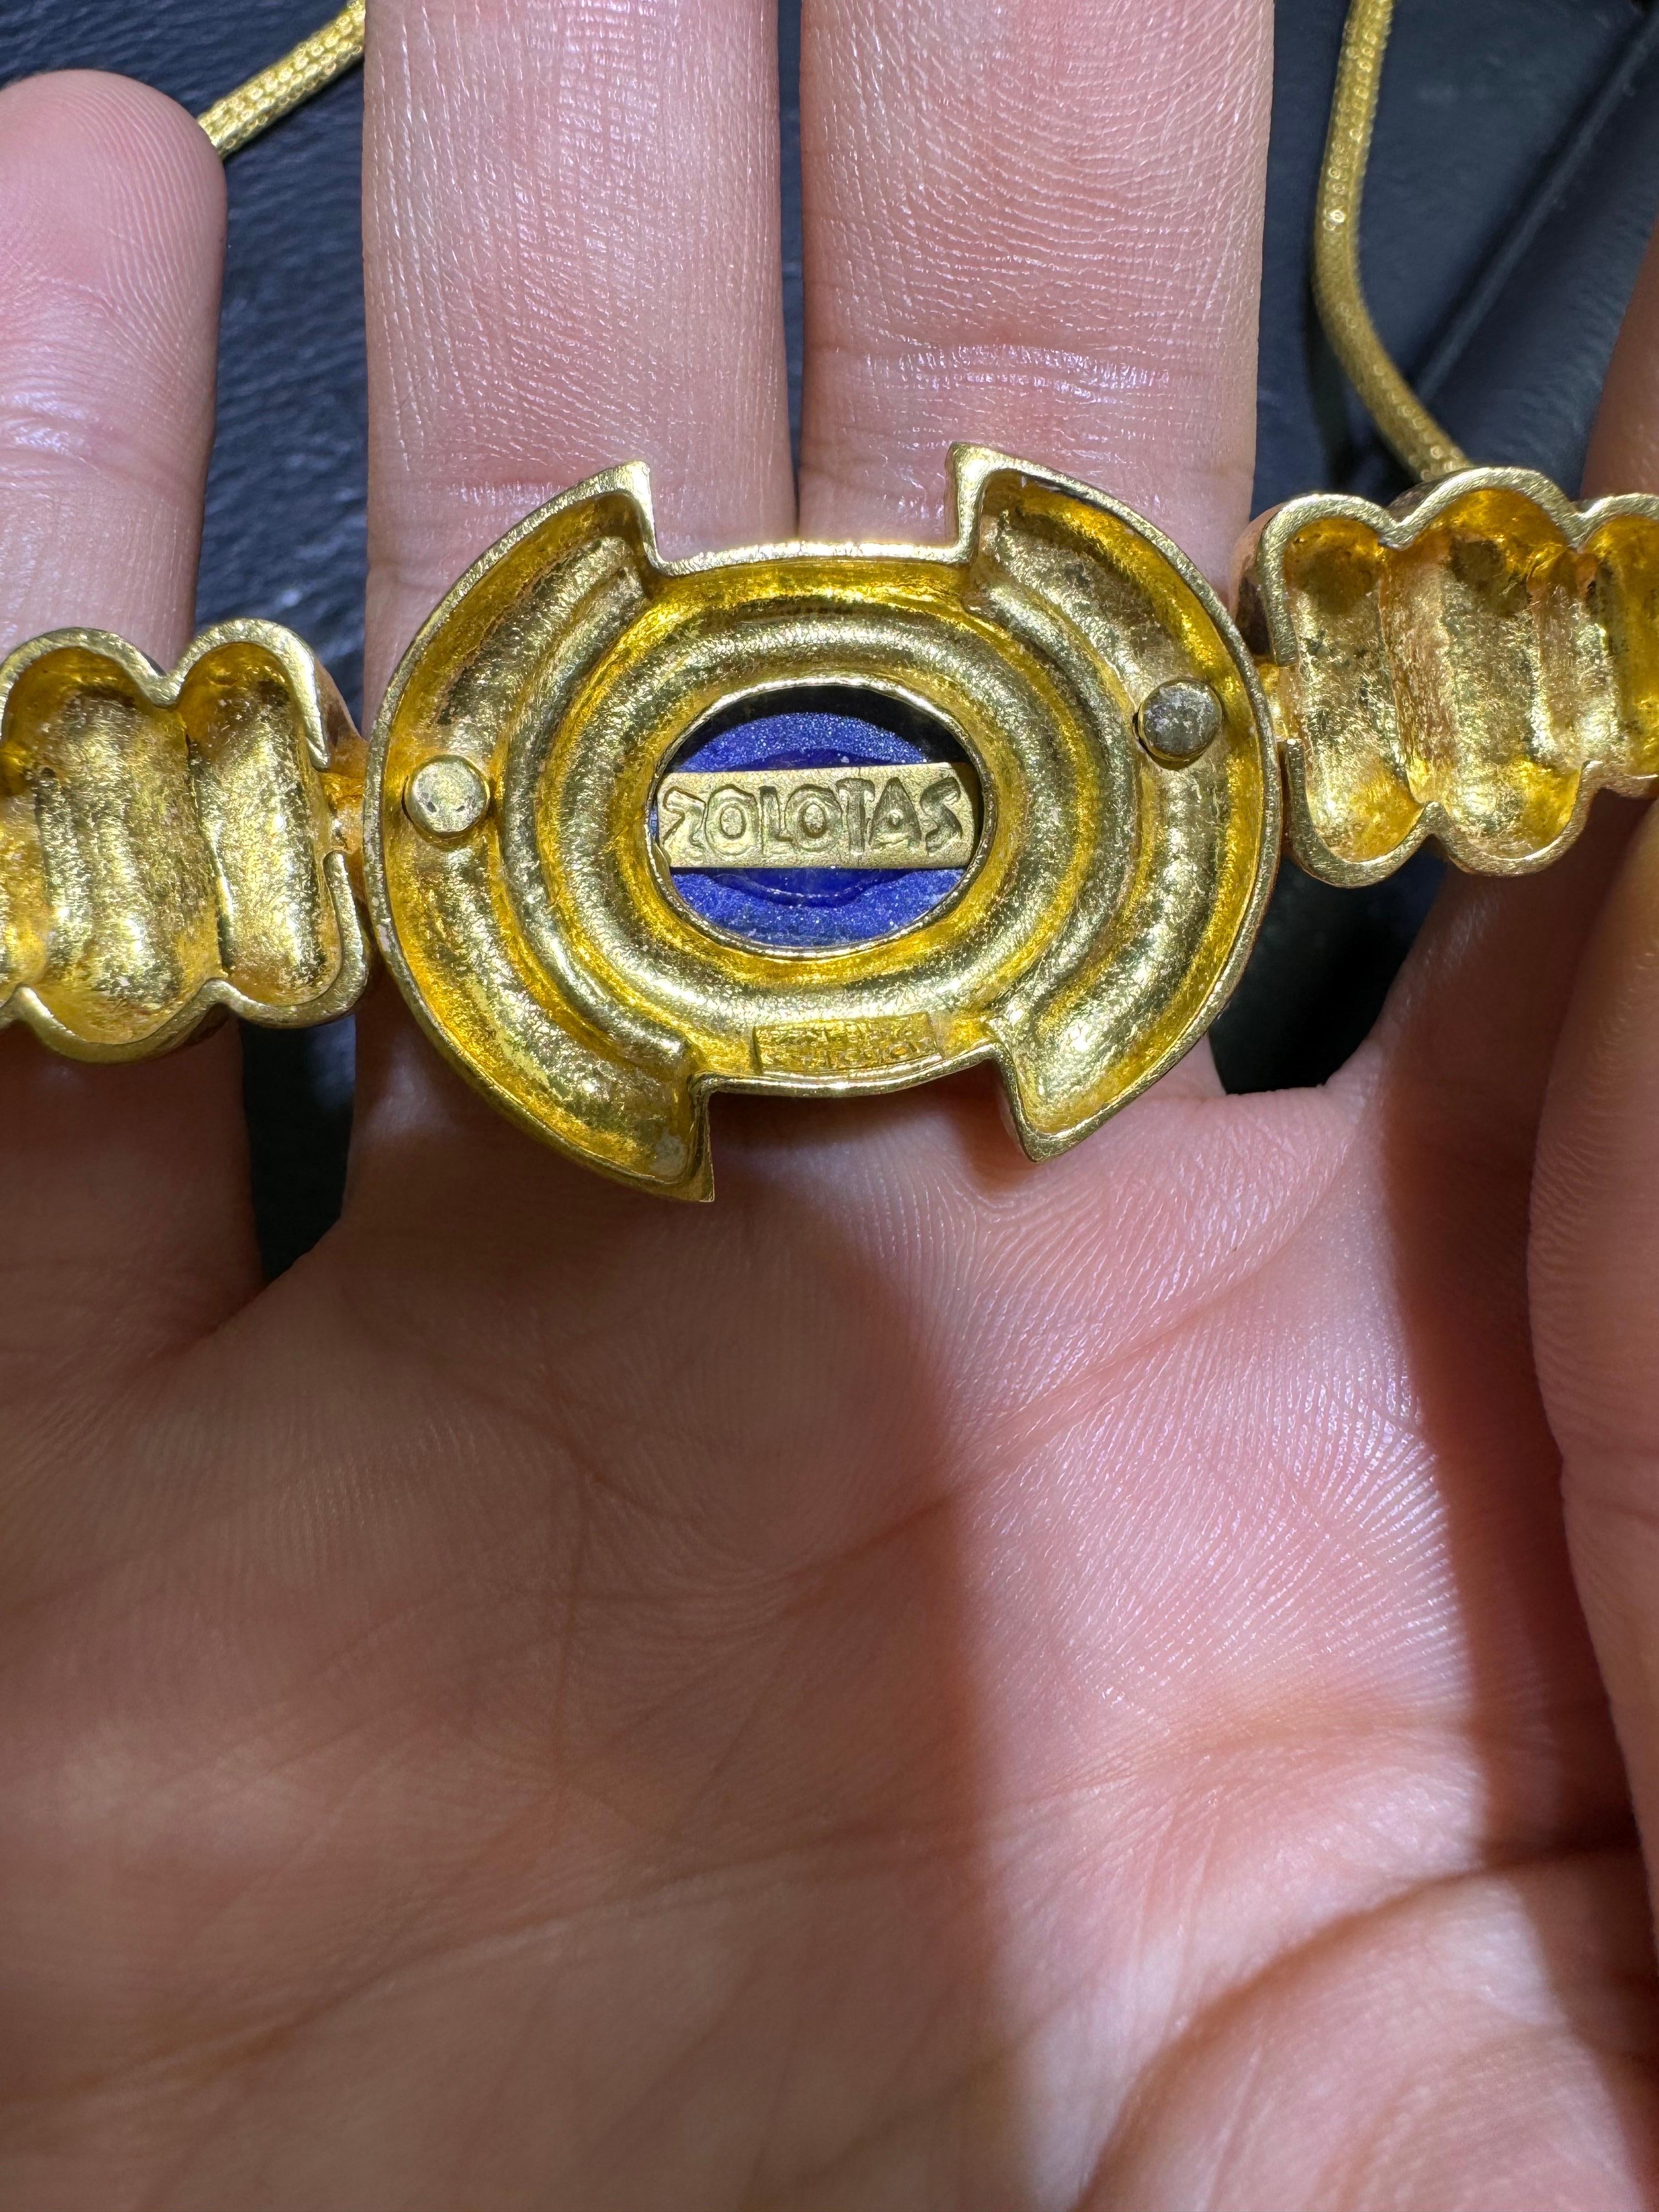 Zolotas Lapis Pendant Necklace 22 Karat Yellow Gold 40.9 grams  For Sale 2